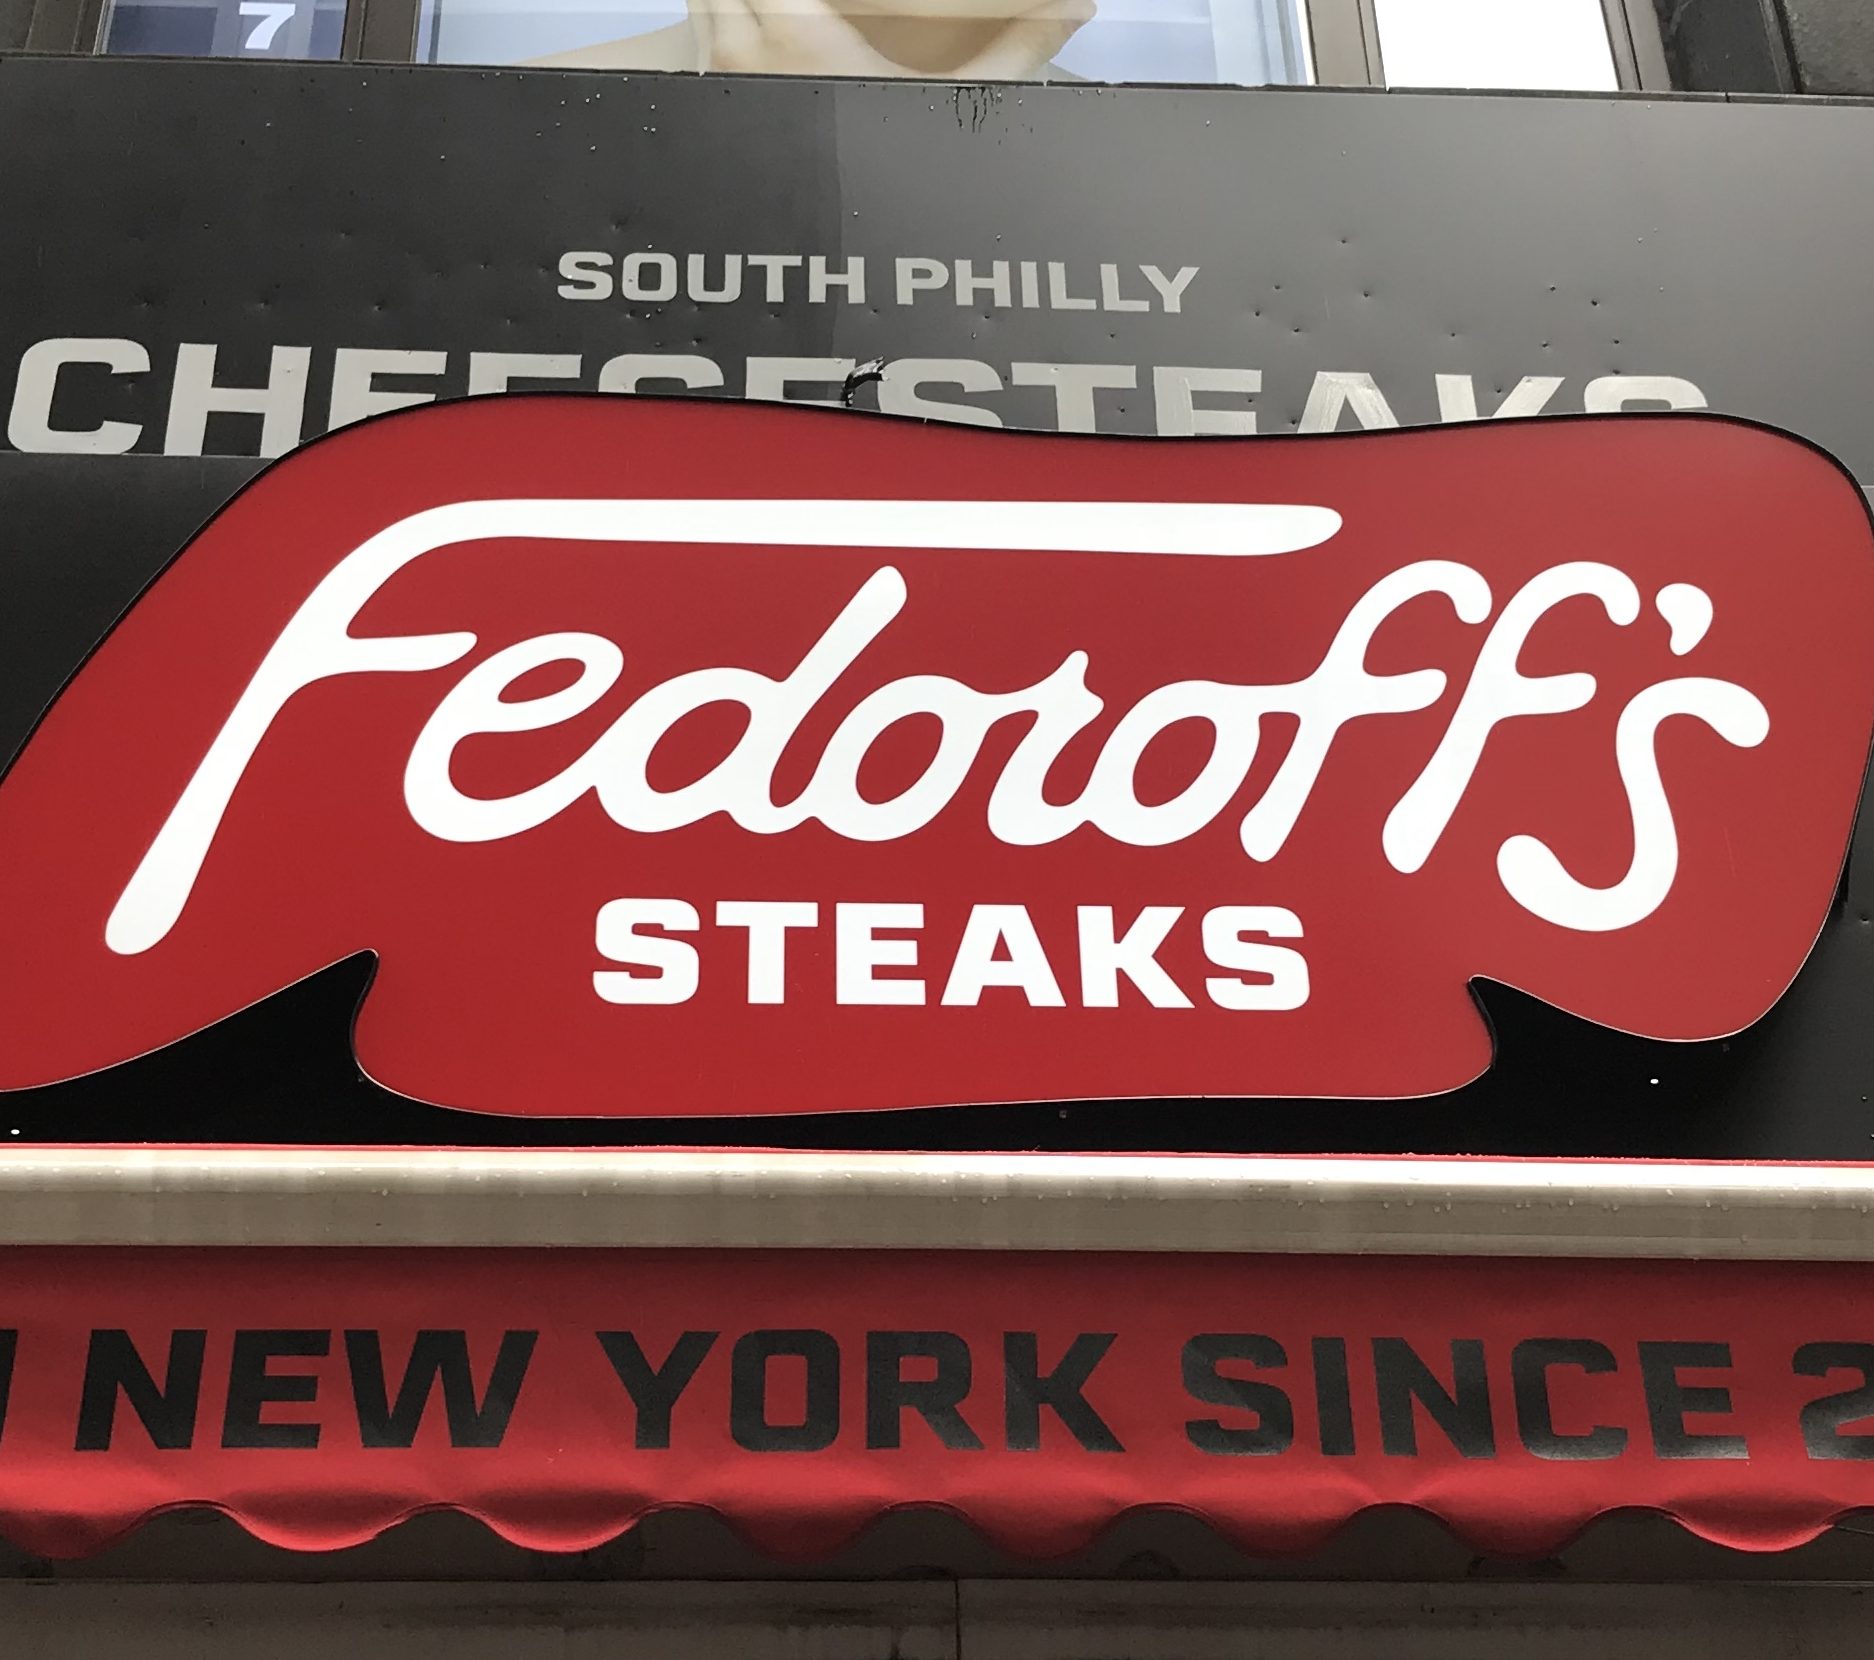 Federoff’s Got Impressive Cheesesteak Chops